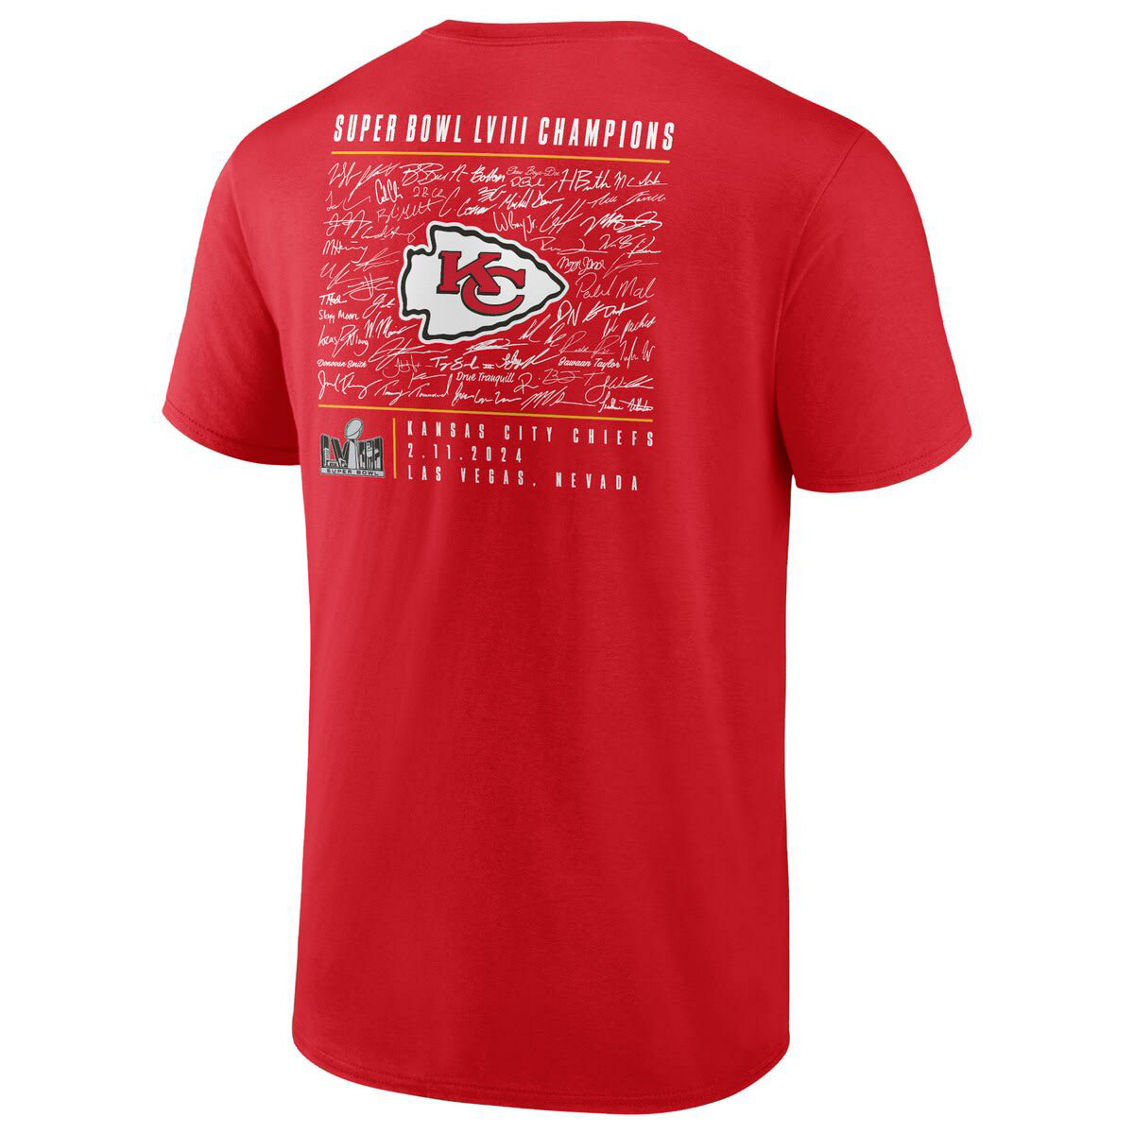 Fanatics Branded Men's Red Kansas City Chiefs Super Bowl LVIII Autograph T-Shirt - Image 4 of 4